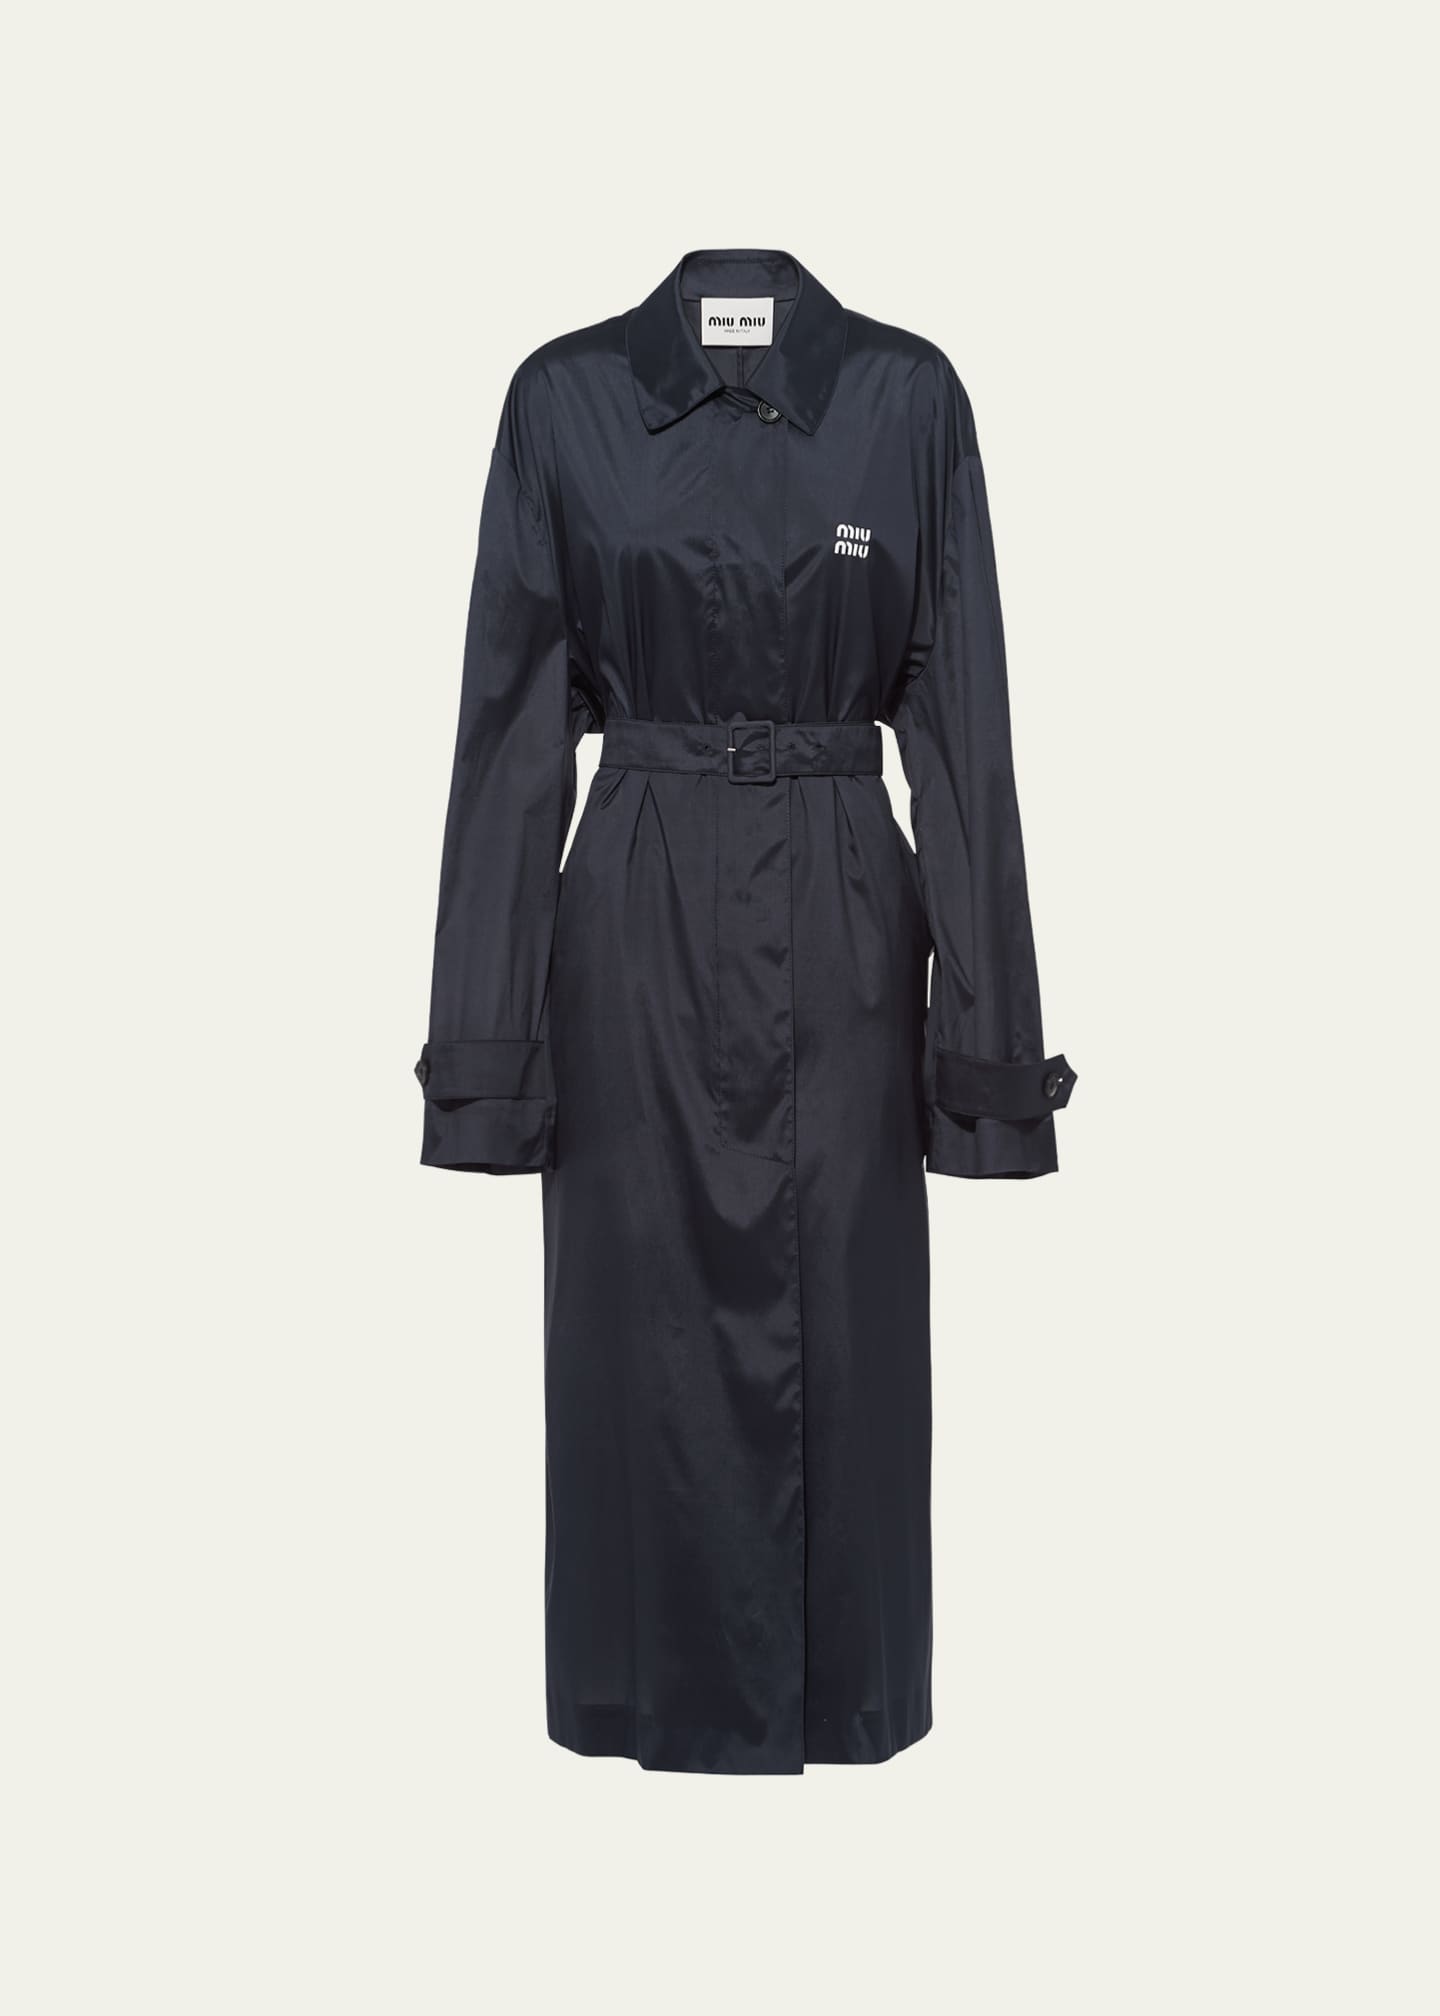 Miu Miu Technical Silk Jumpsuit, Women, Black, Size 38